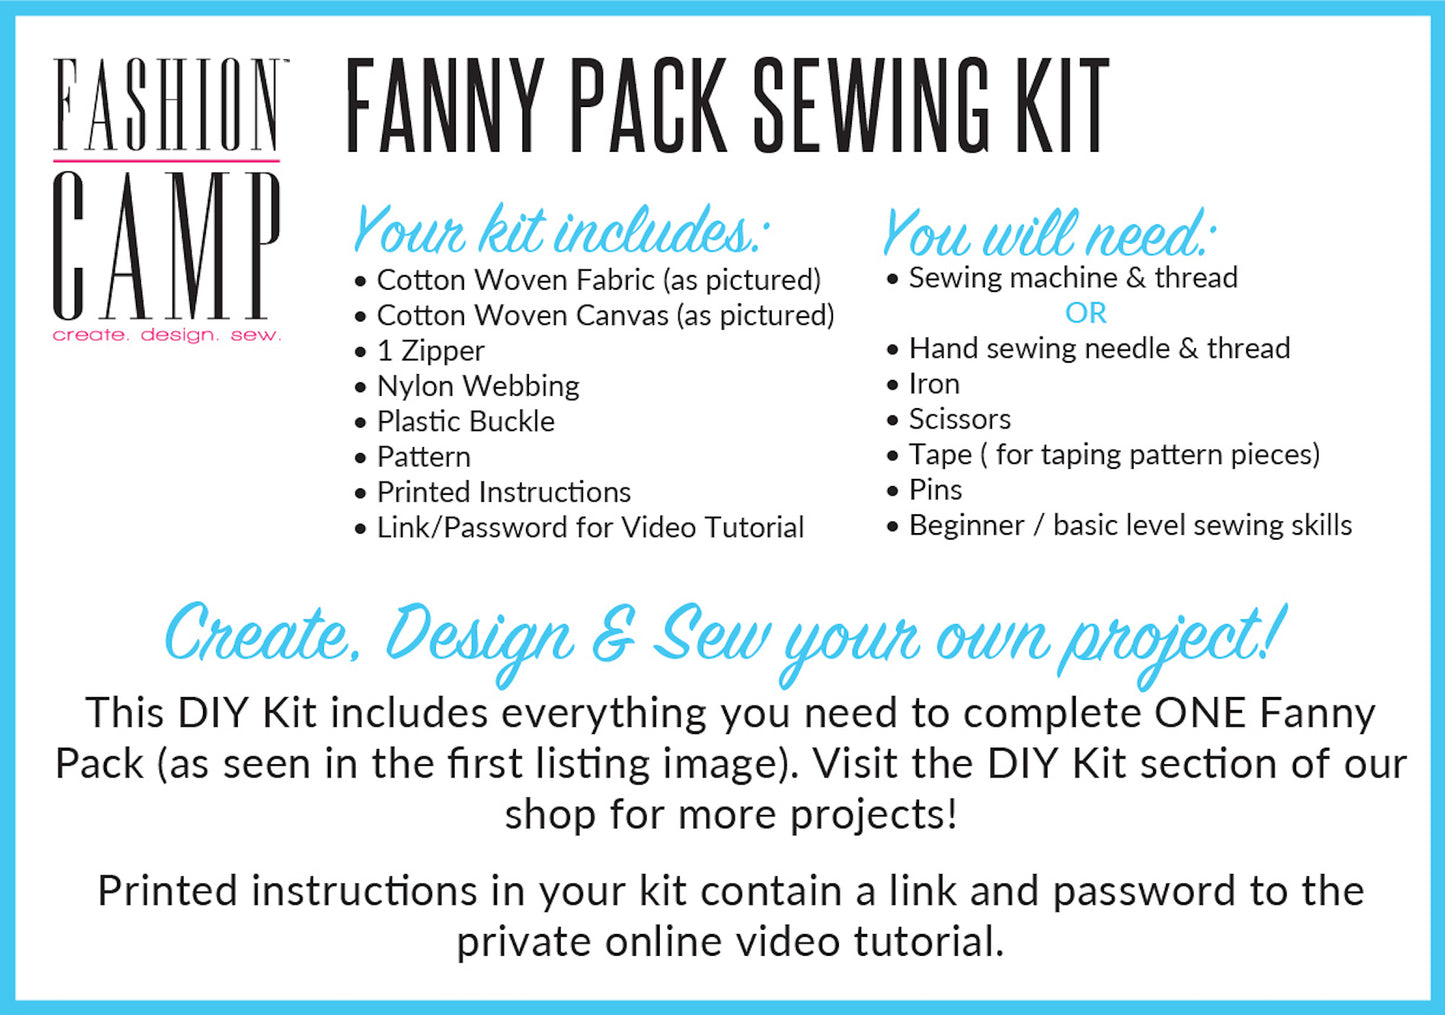 DIY Fanny Pack Sewing Kit & Video Tutorial